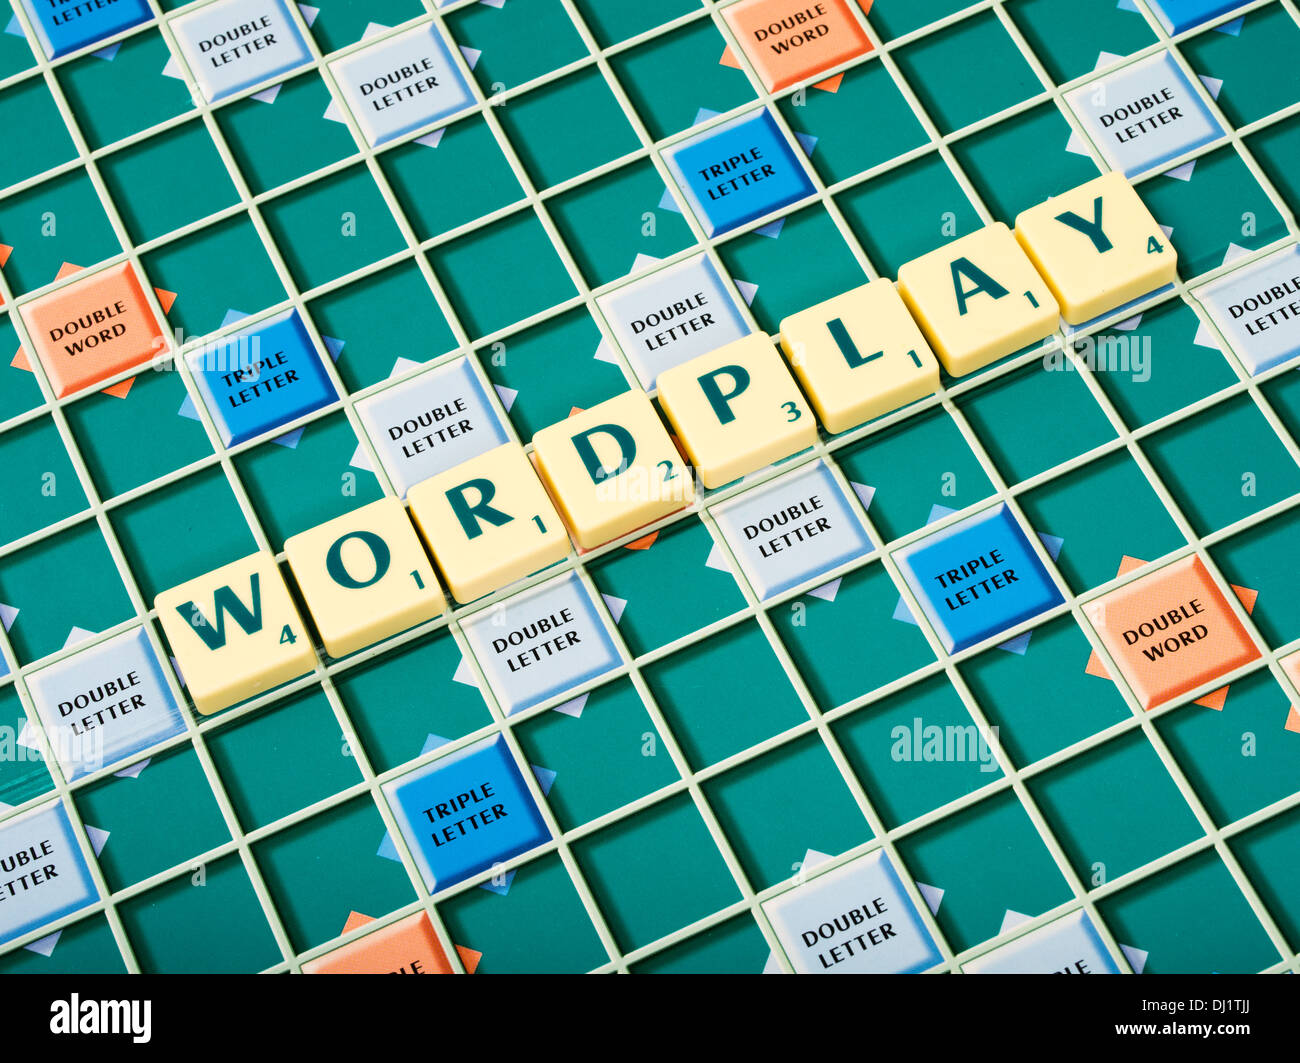 Scrabble Word Board Game by Mattel / Hasbro Stock Photo